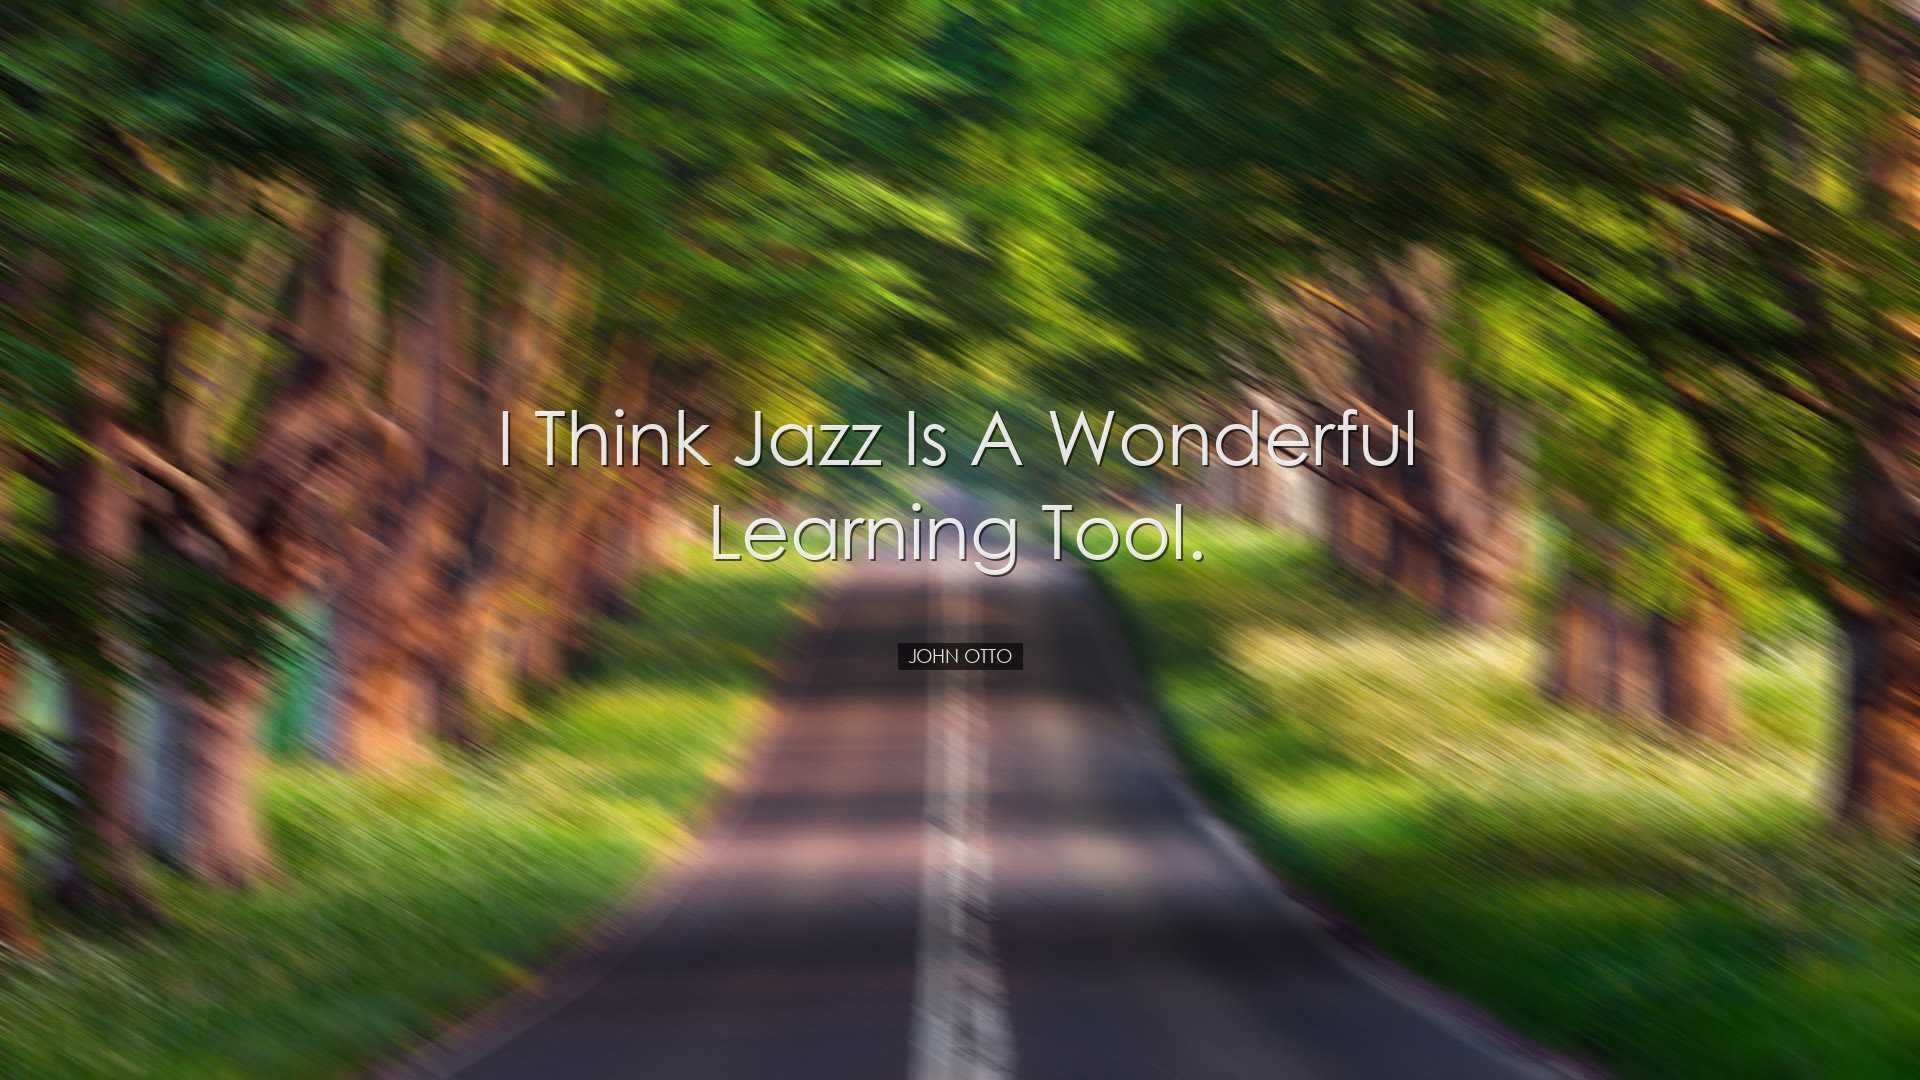 I think jazz is a wonderful learning tool. - John Otto